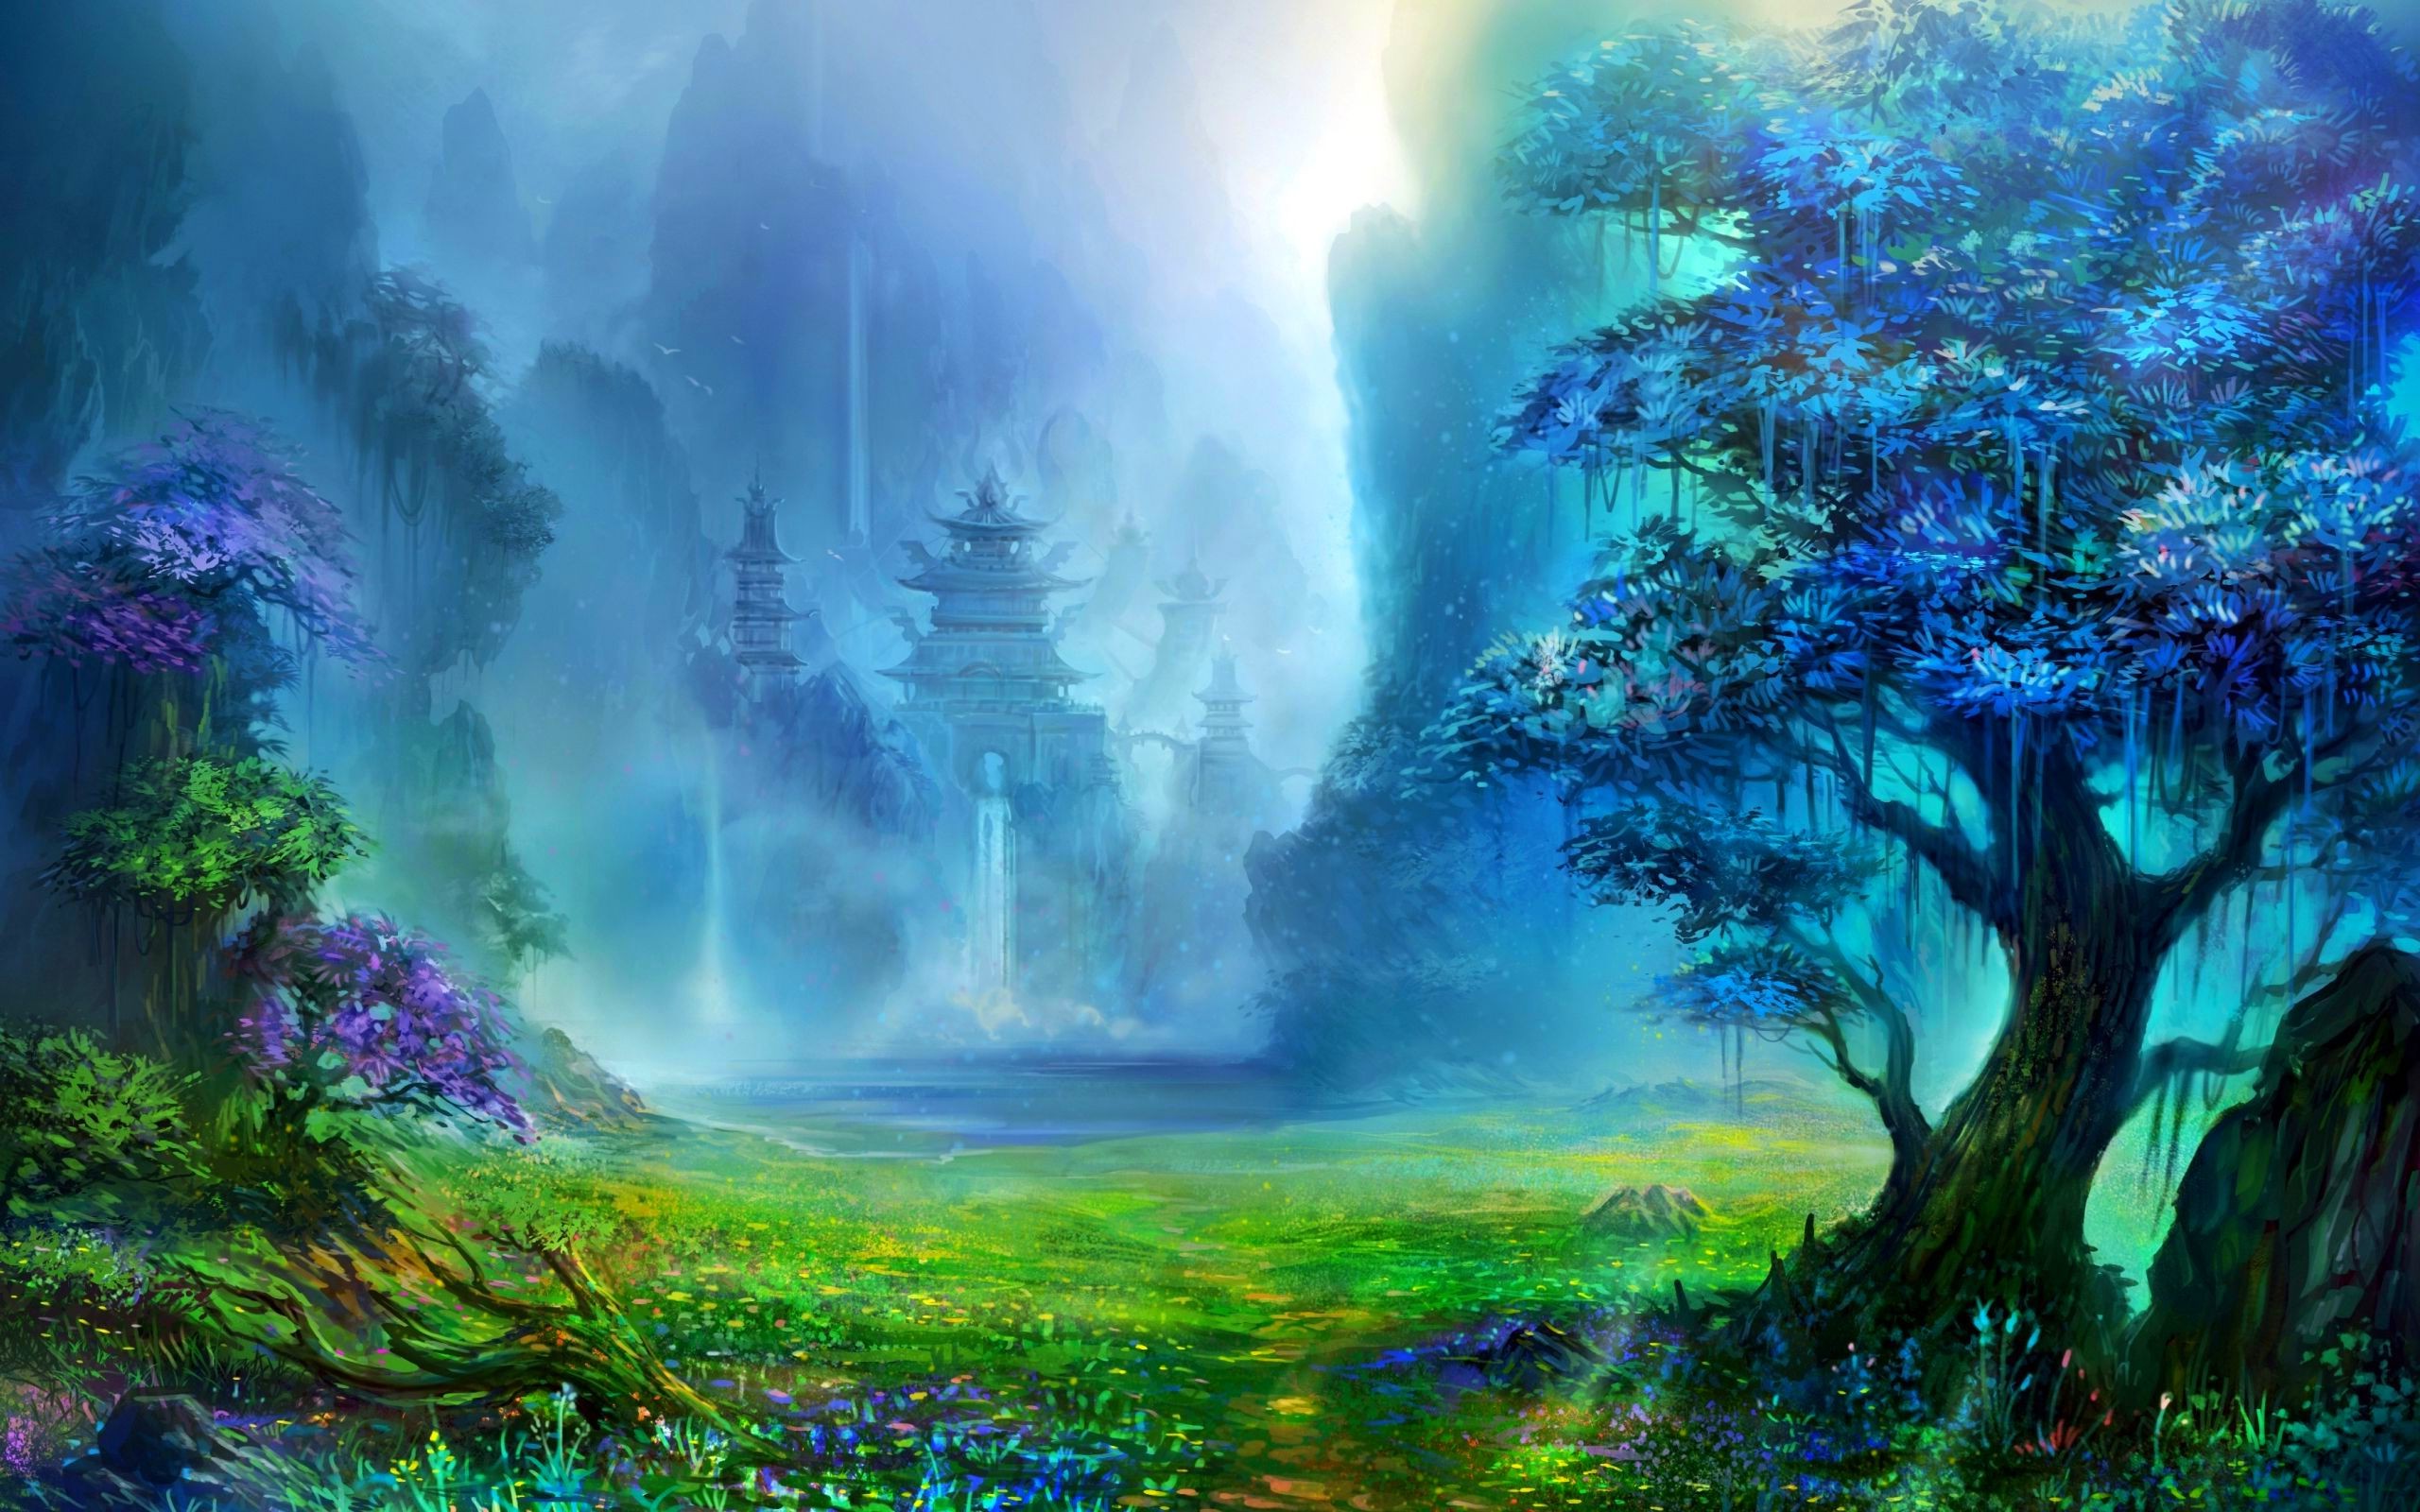 fantasy Art, Pagoda, Asian Architecture, Trees, Waterfall, Artwork ...
